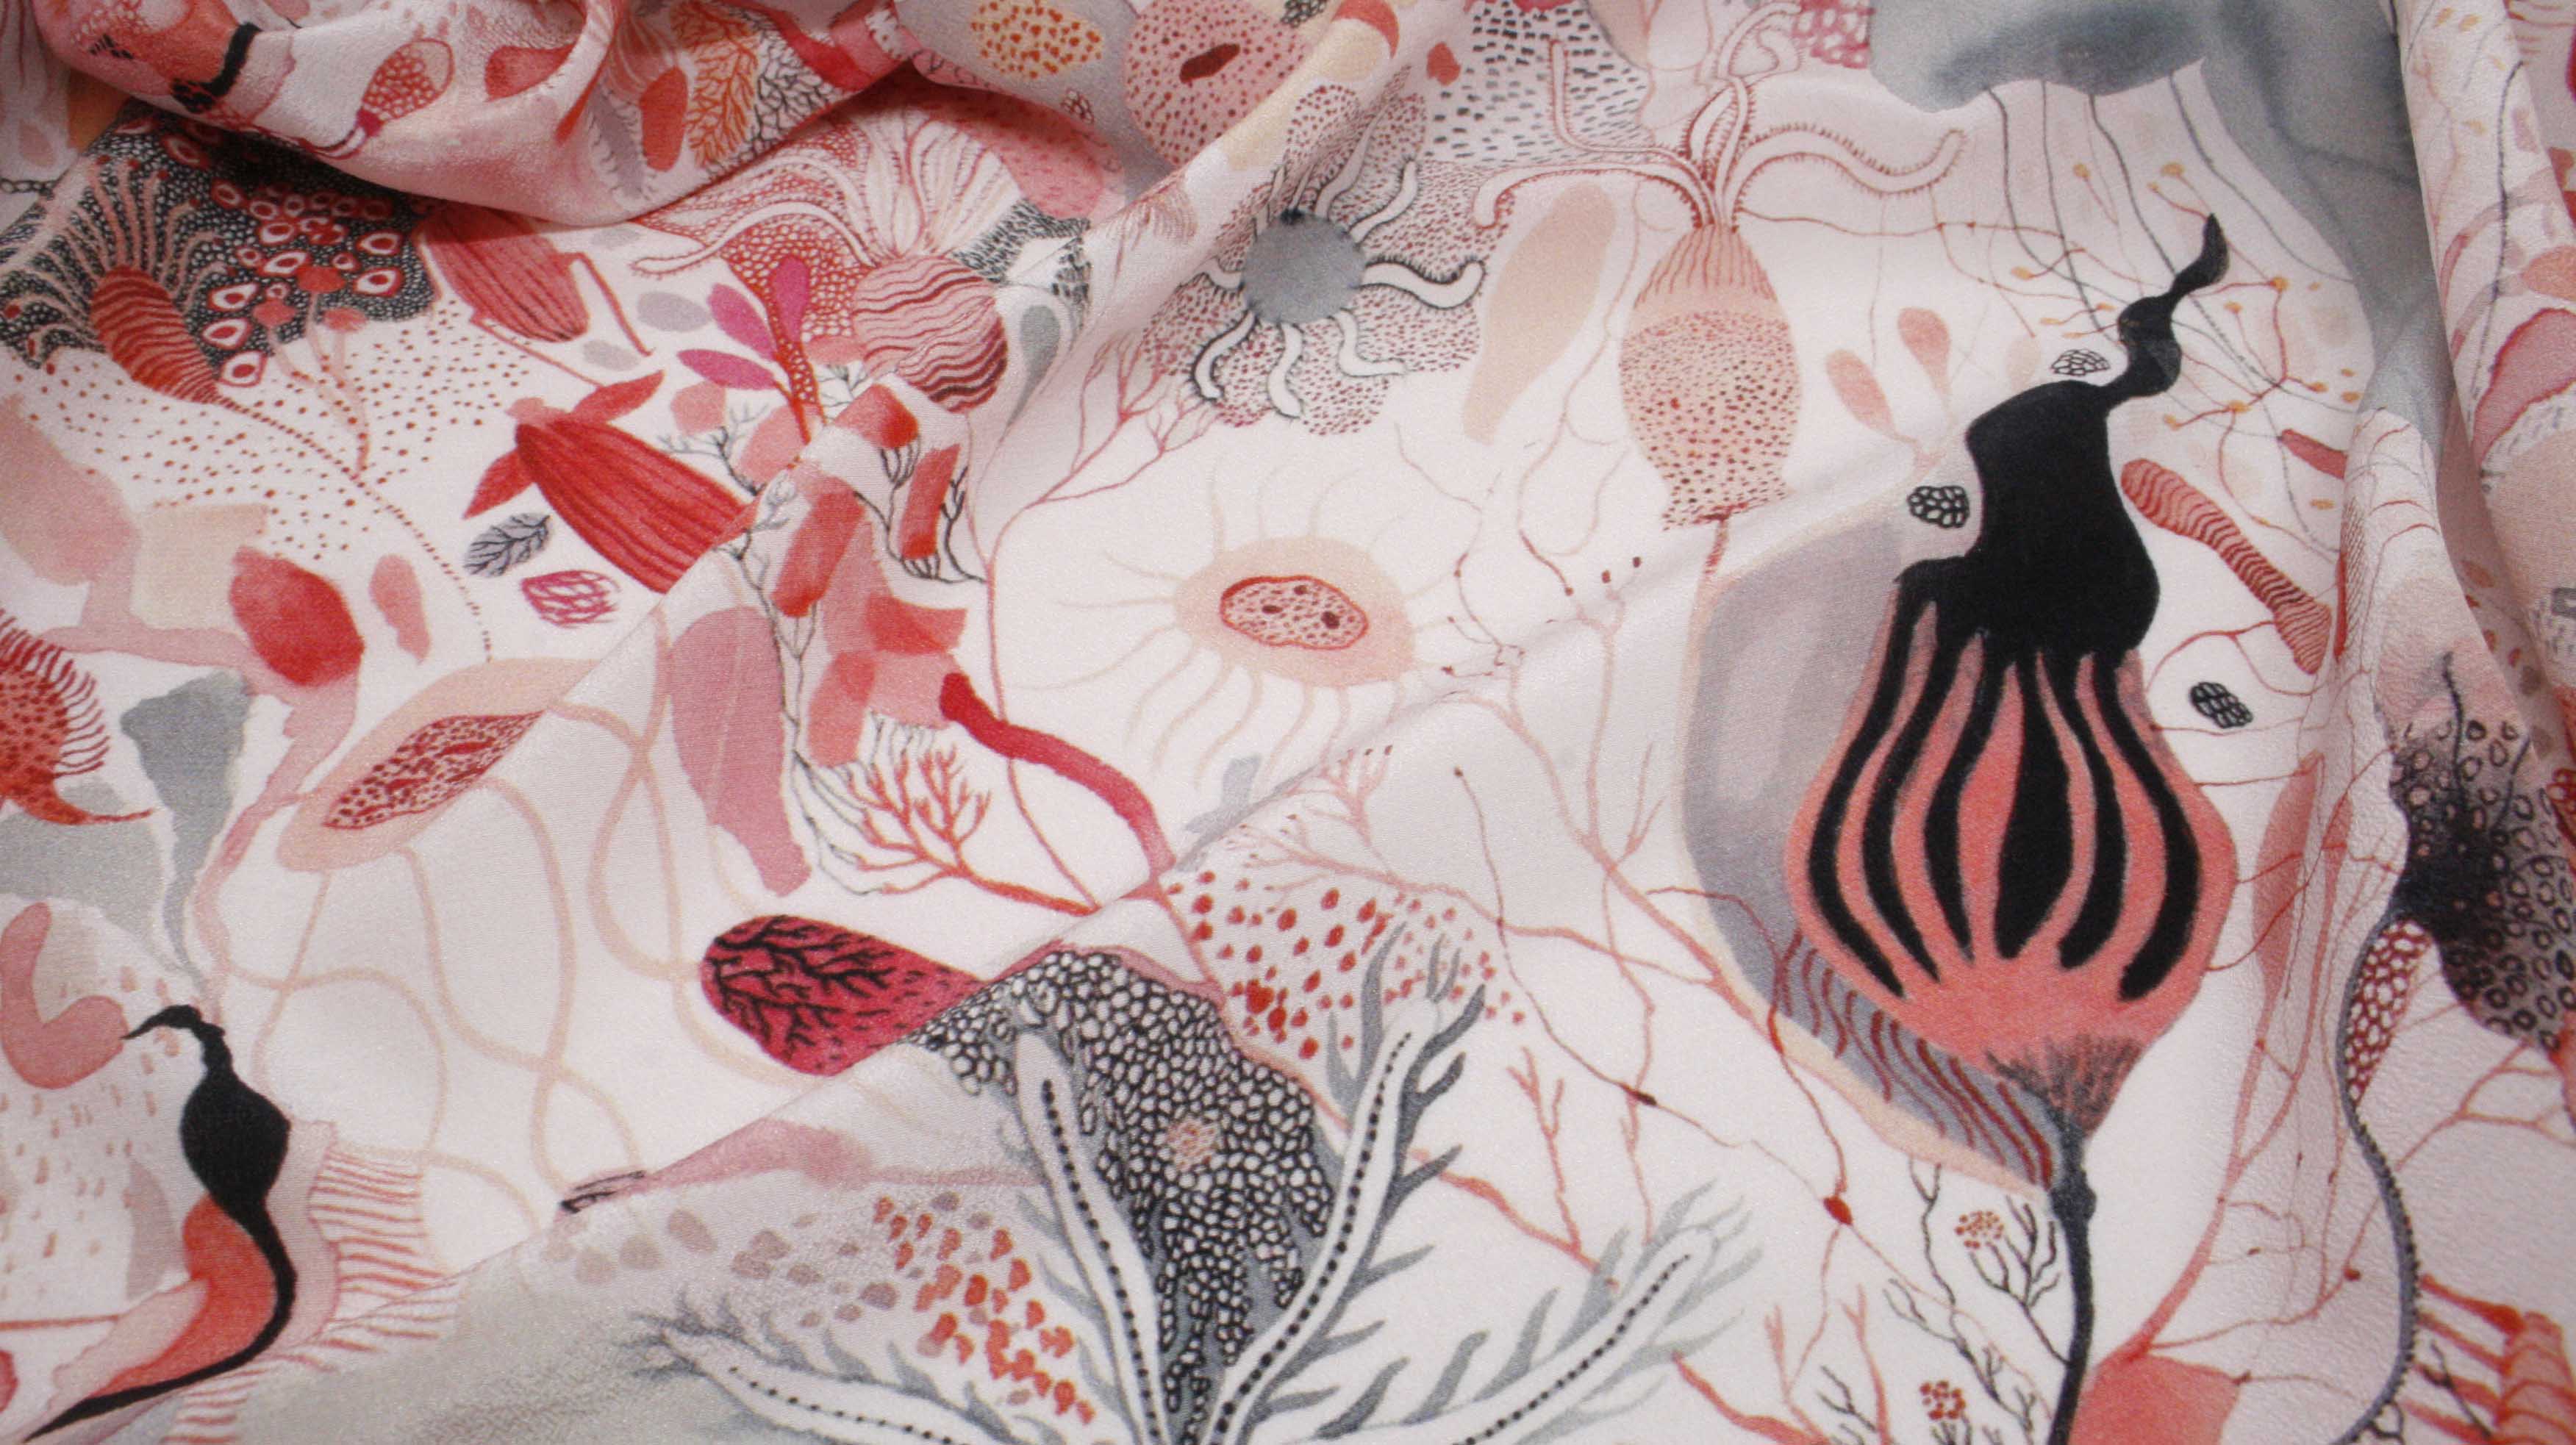 Imaginary Science 'Soma' Silk Scarf Textiles Jess Hall 